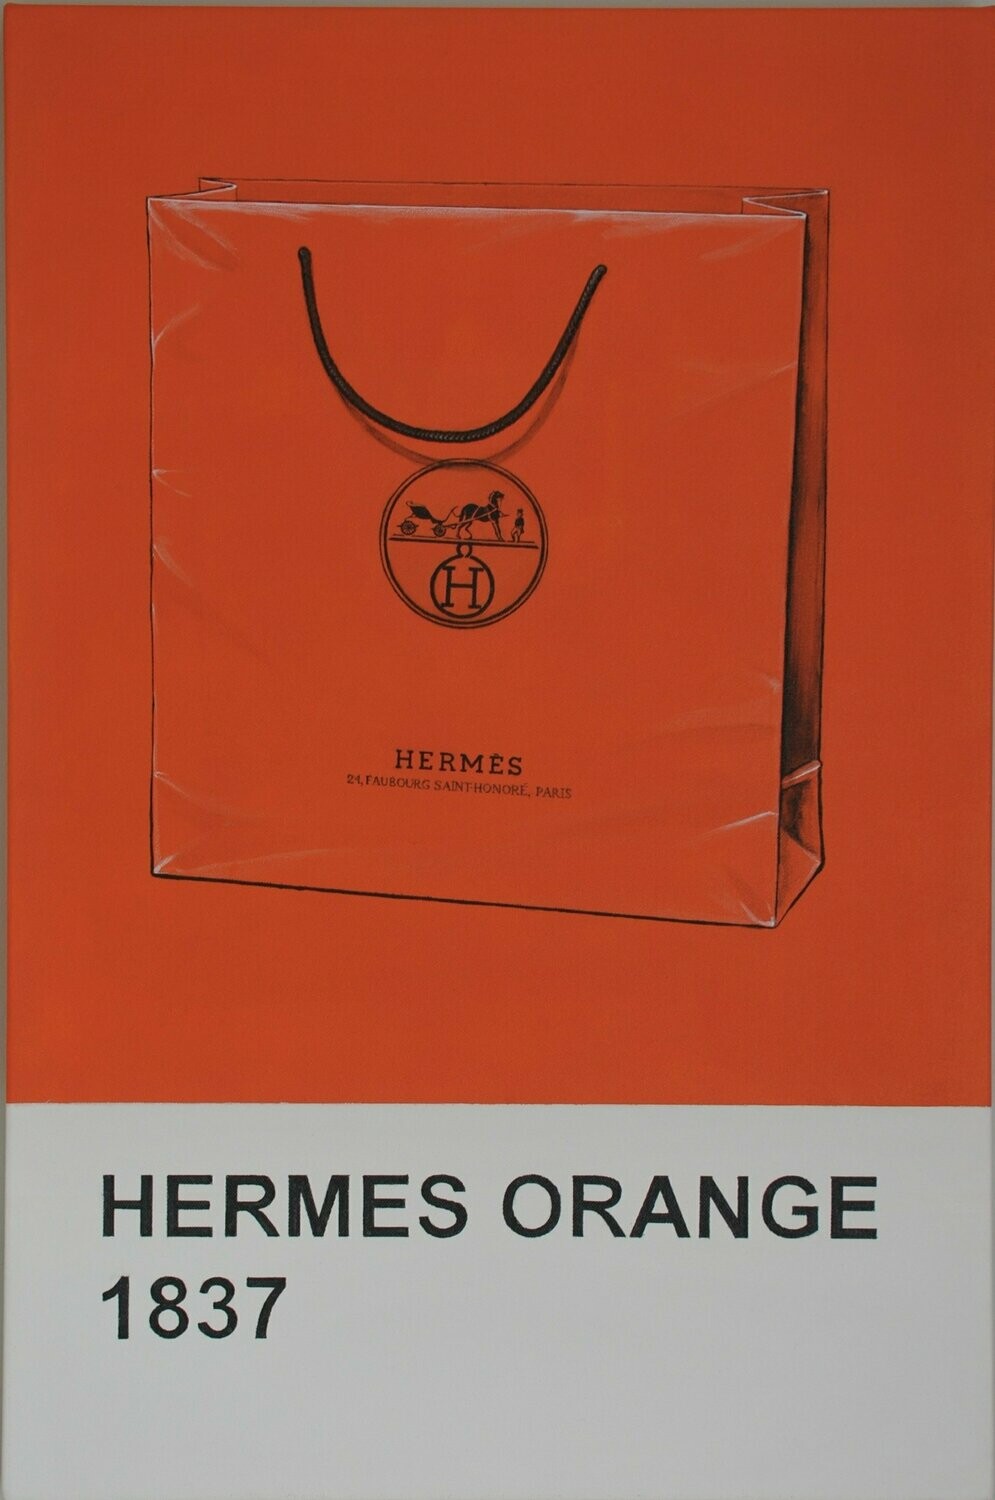 HERMES ORANGE 1837